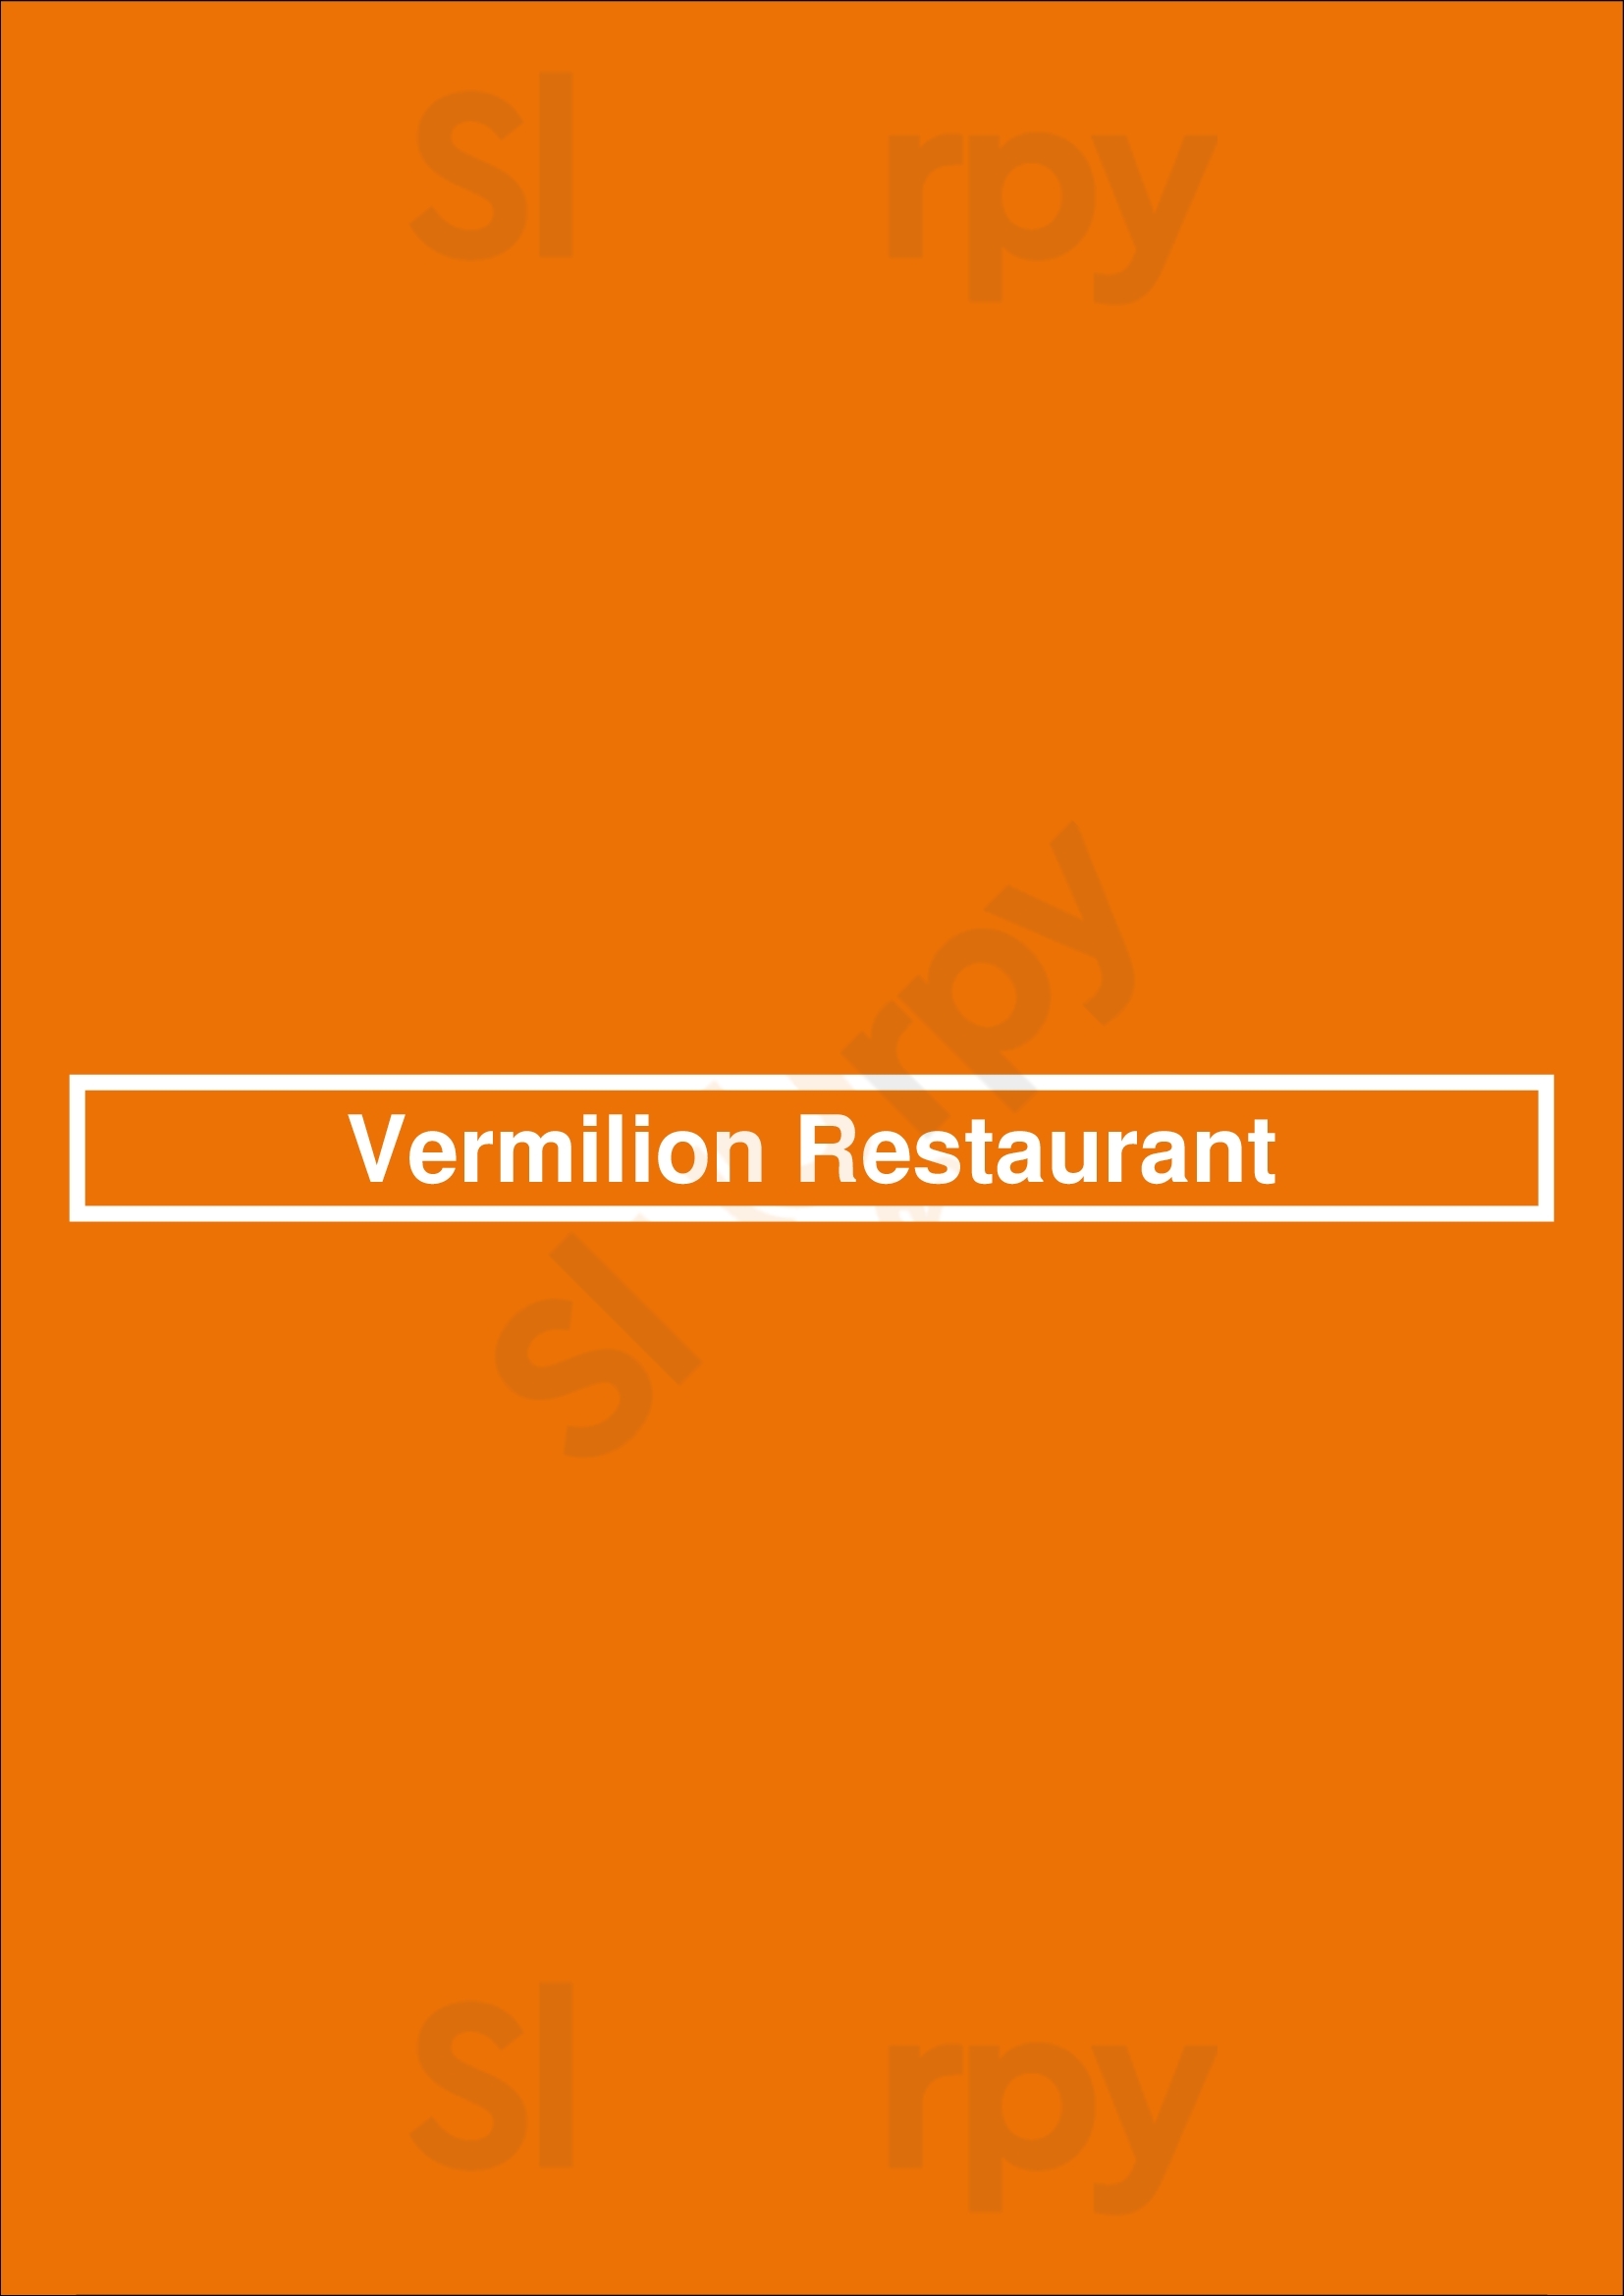 Vermilion Restaurant Alexandria Menu - 1